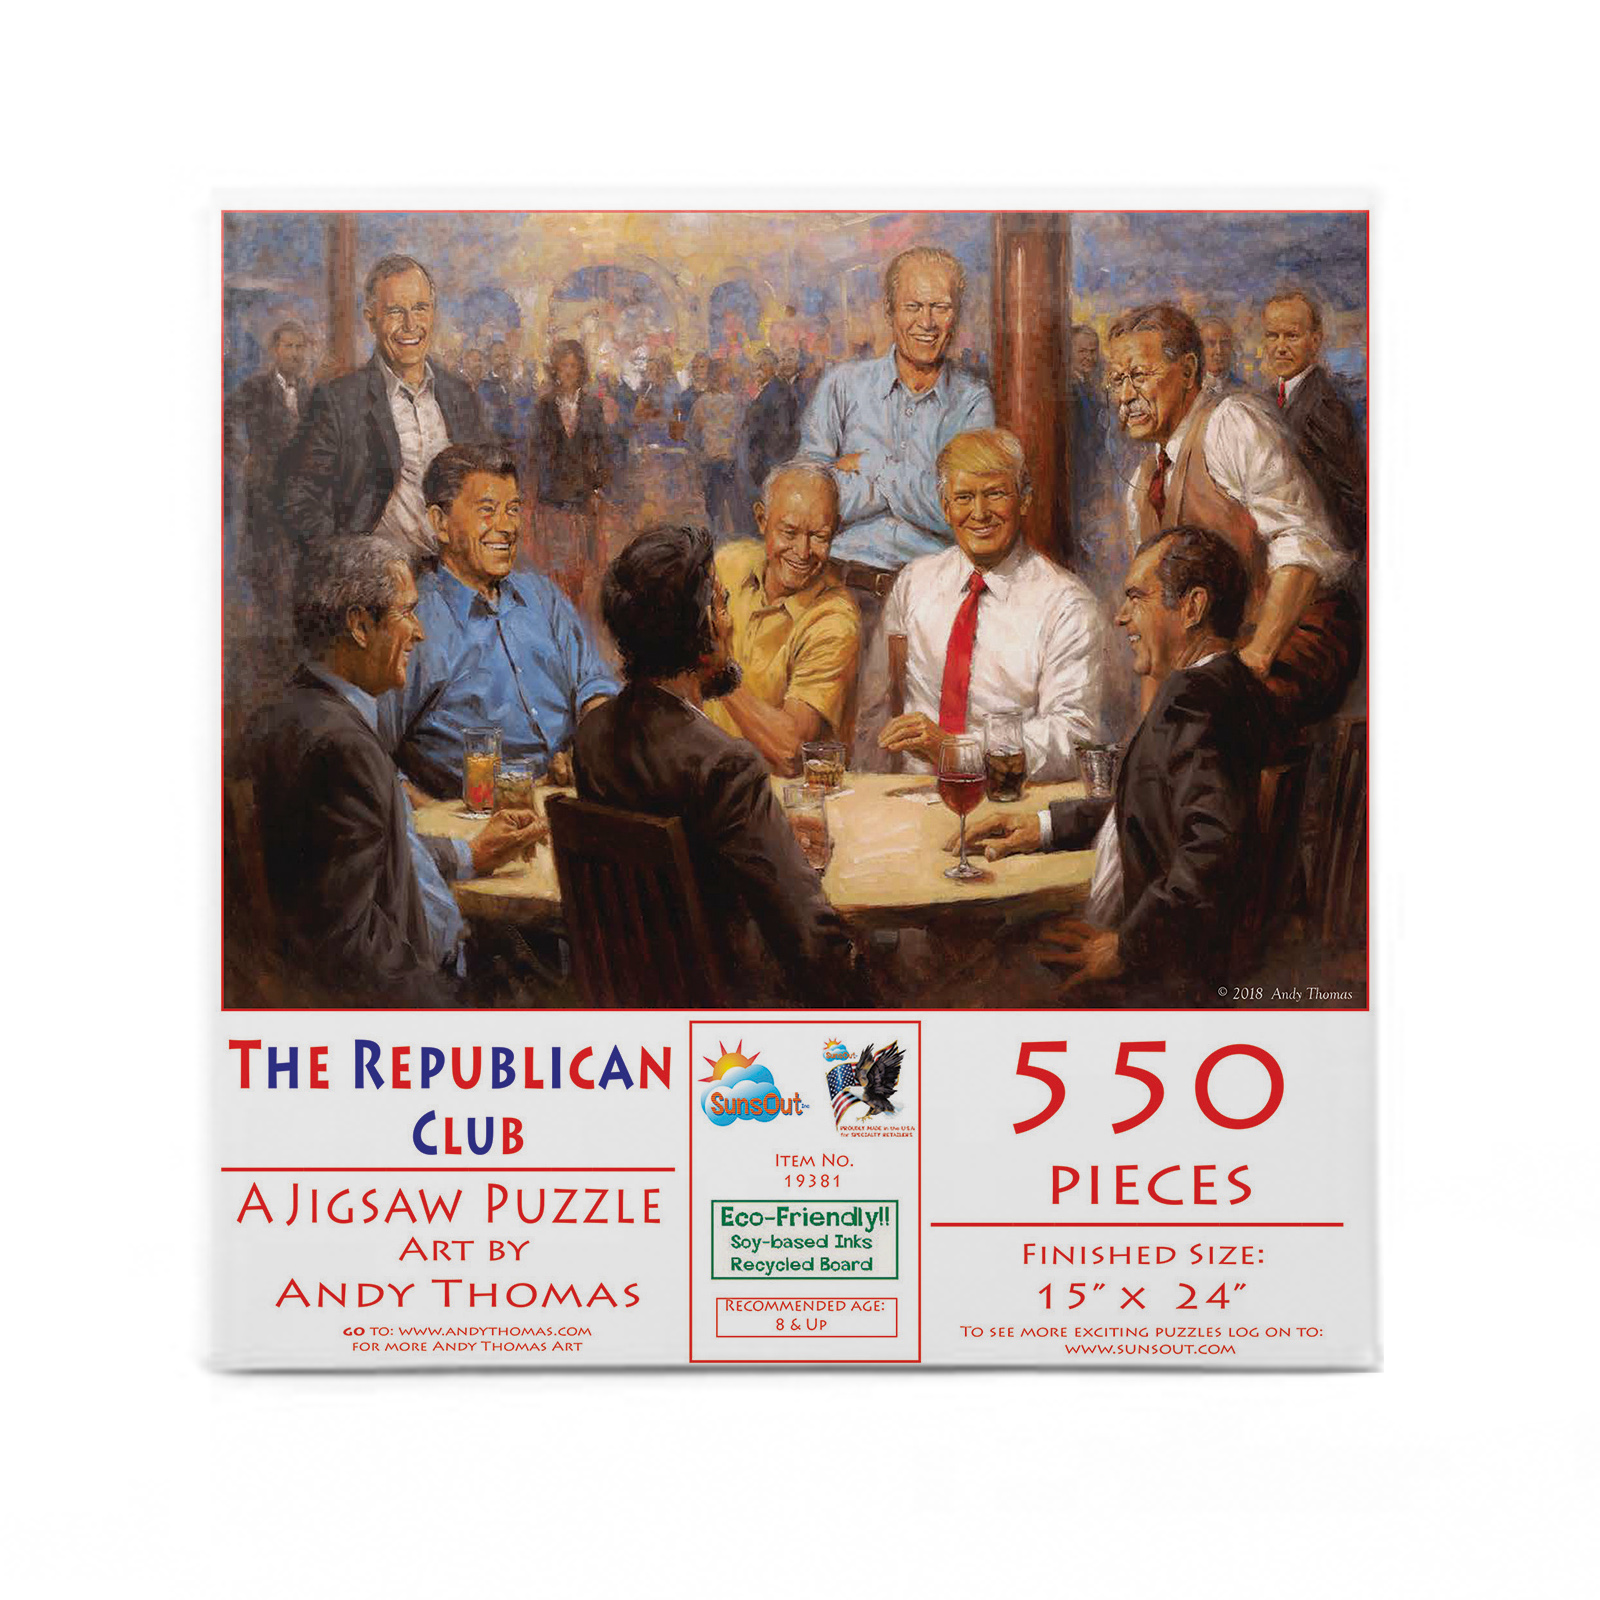 The Republican Club